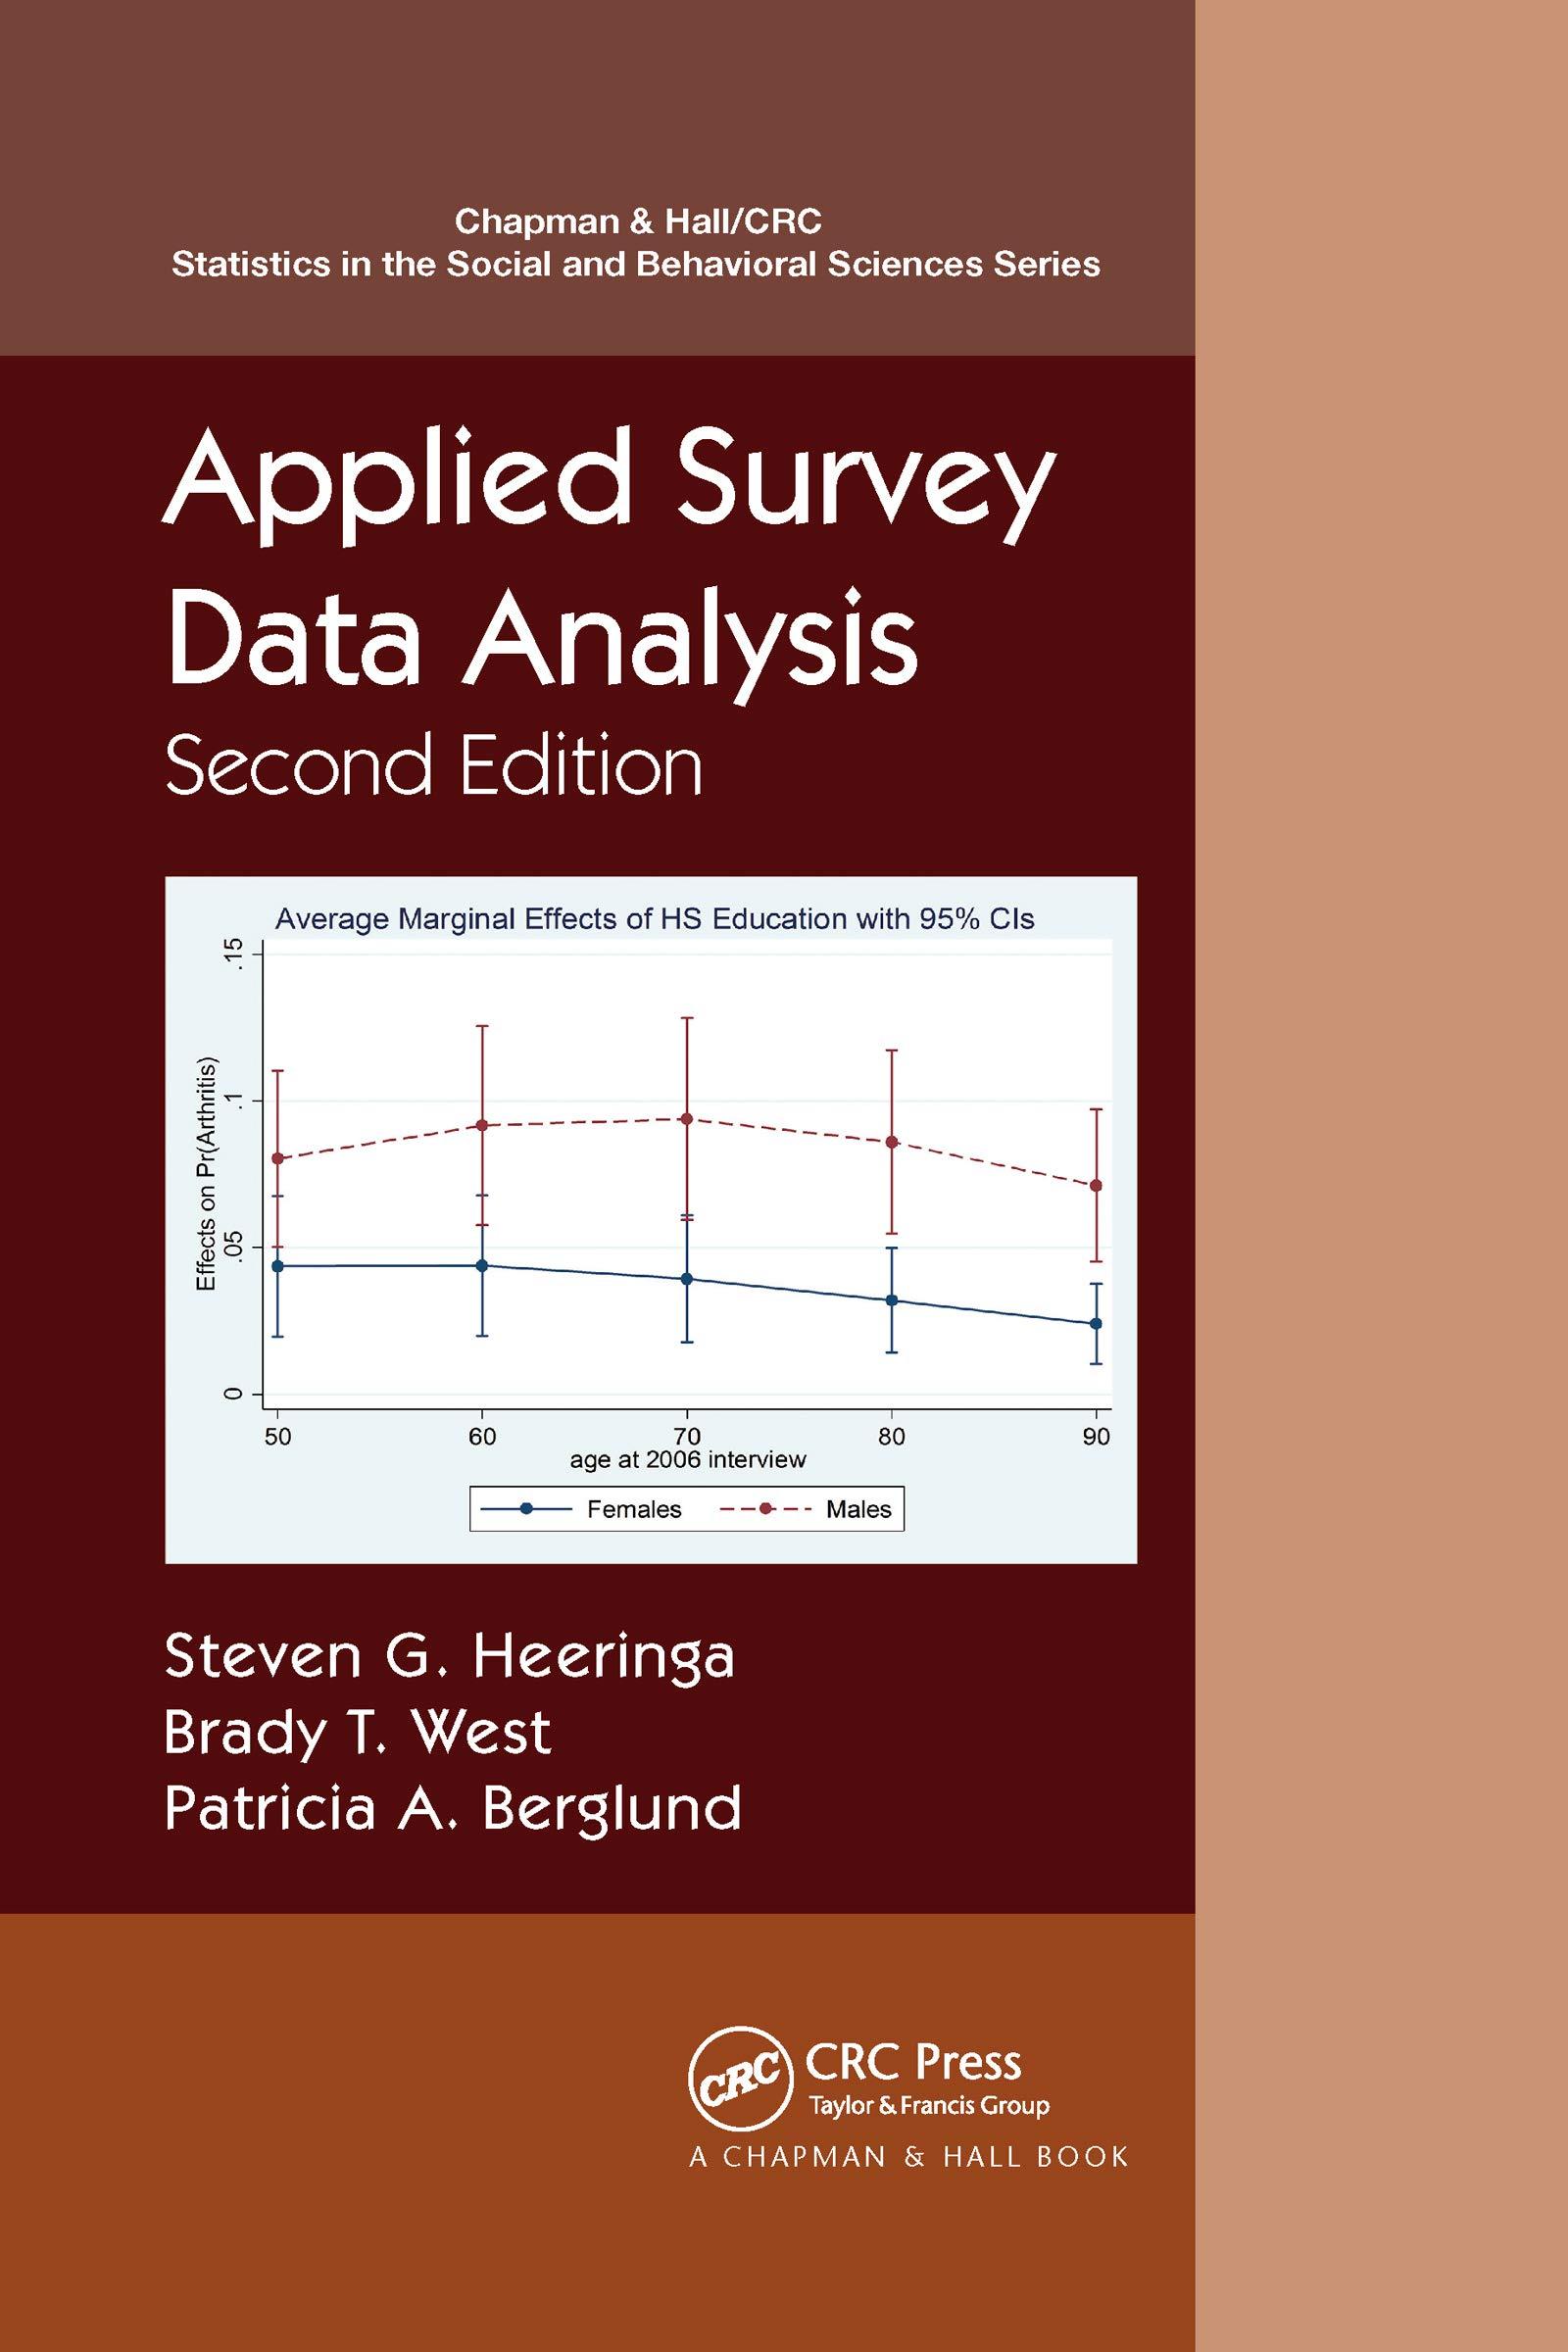 applied survey data analysis 2nd edition steven g. heeringa, brady t. west, patricia a. berglund 036773611x,